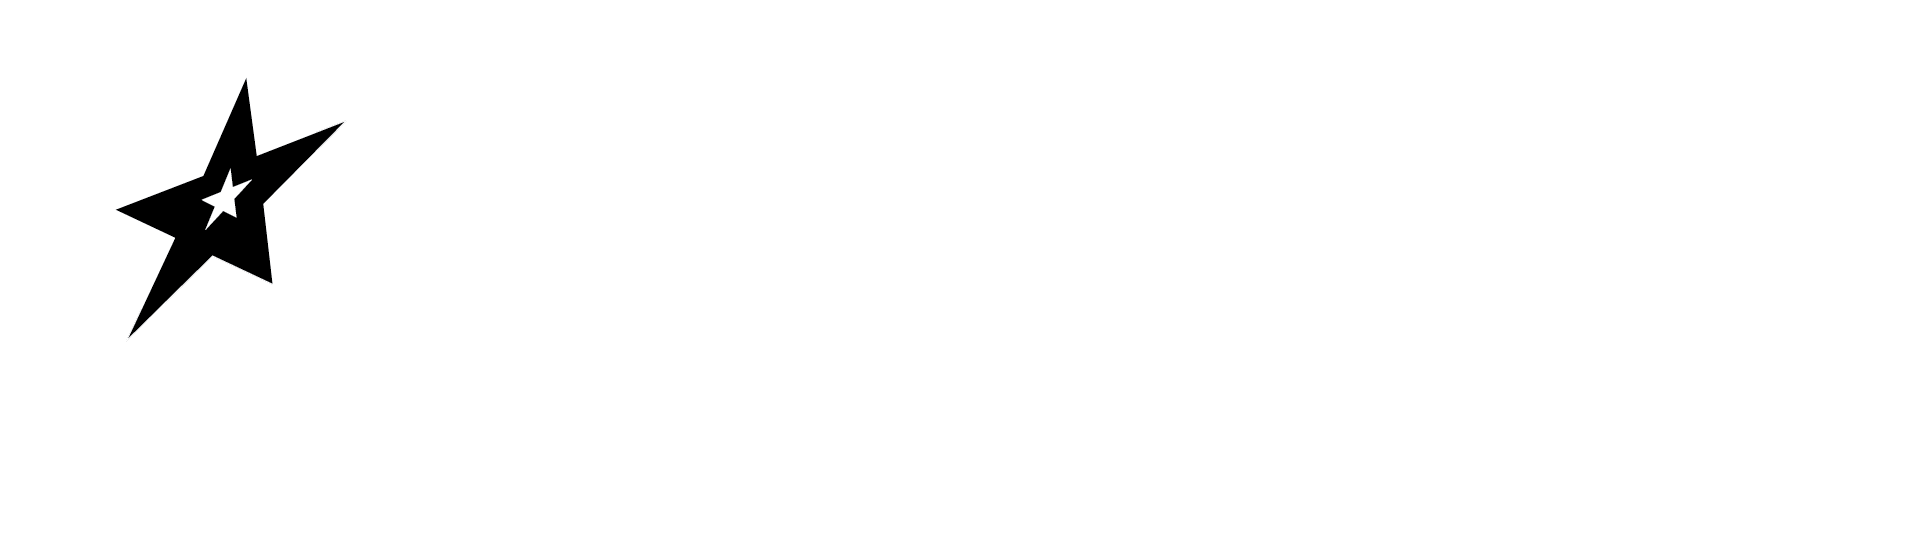 Assembly GameXpo 2019 logo